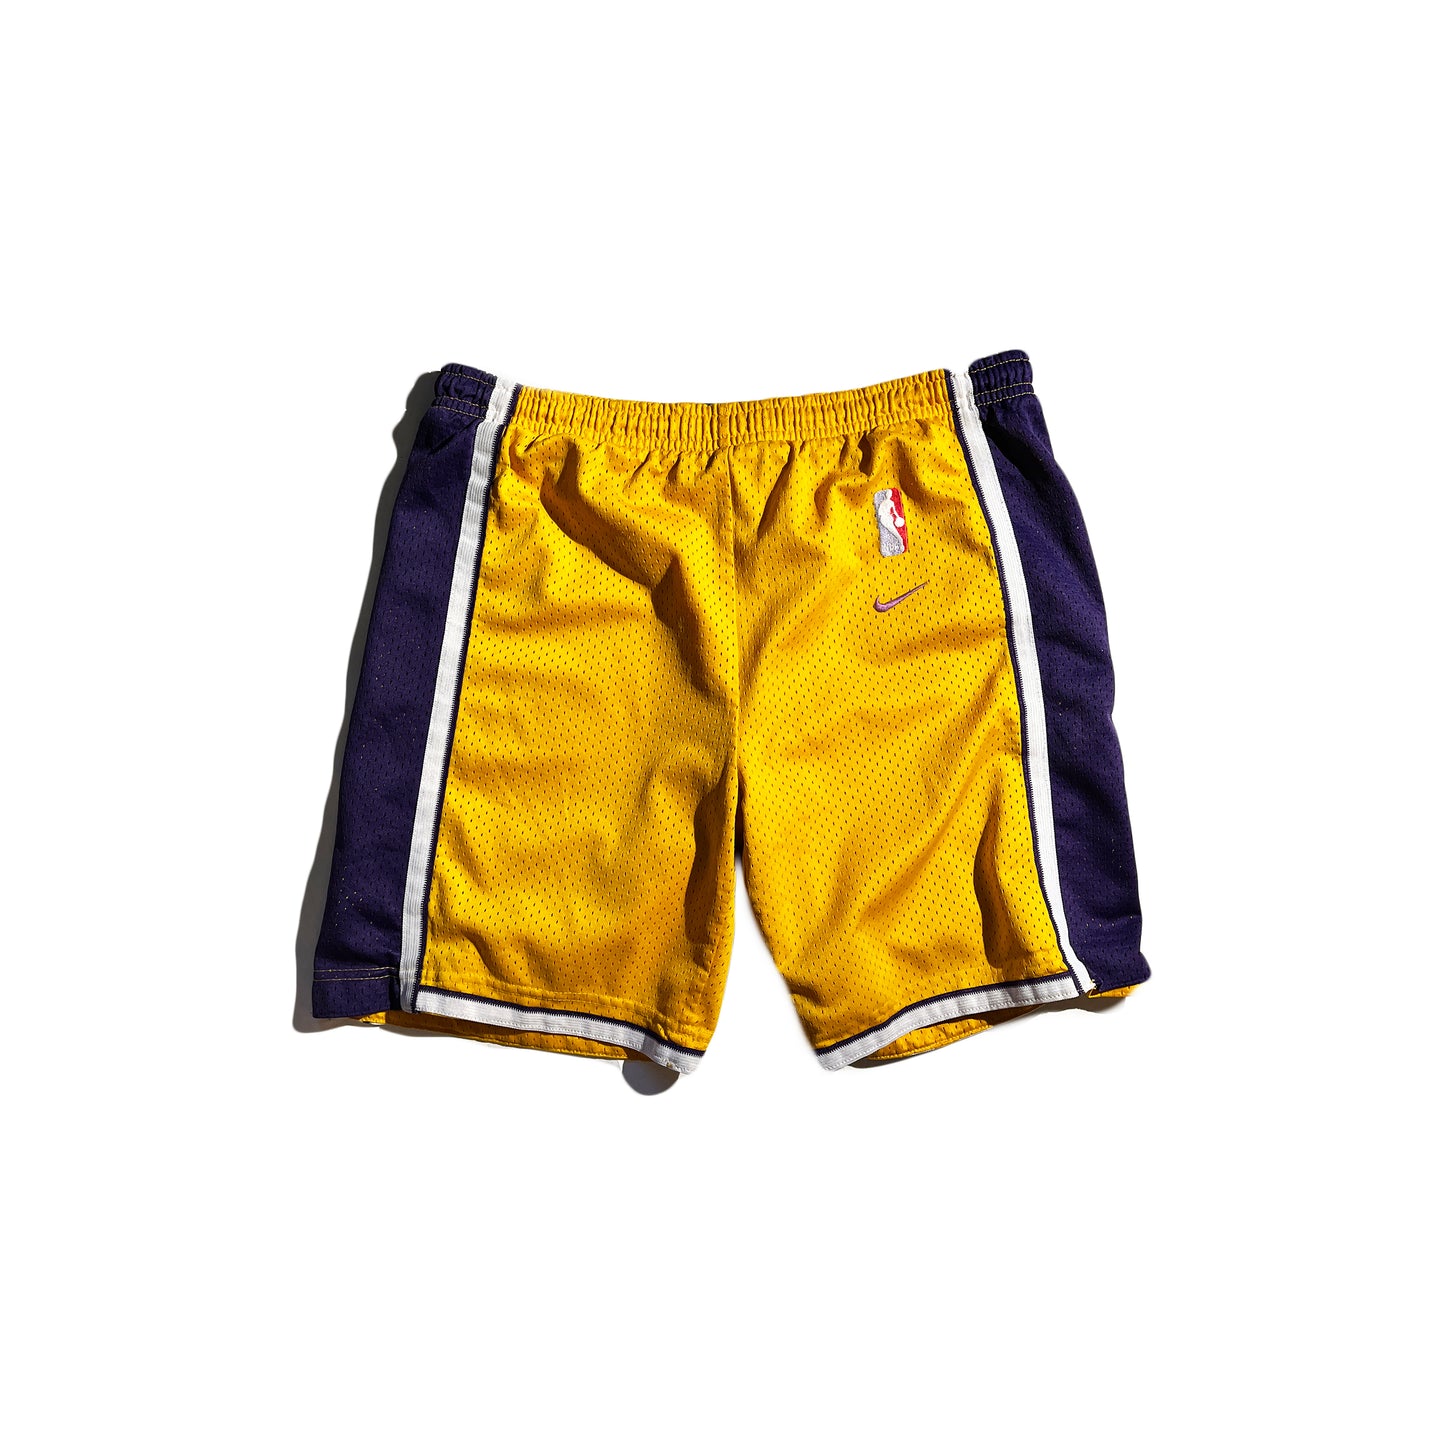 Vintage Lakers Shorts NIKE Mesh Basketball